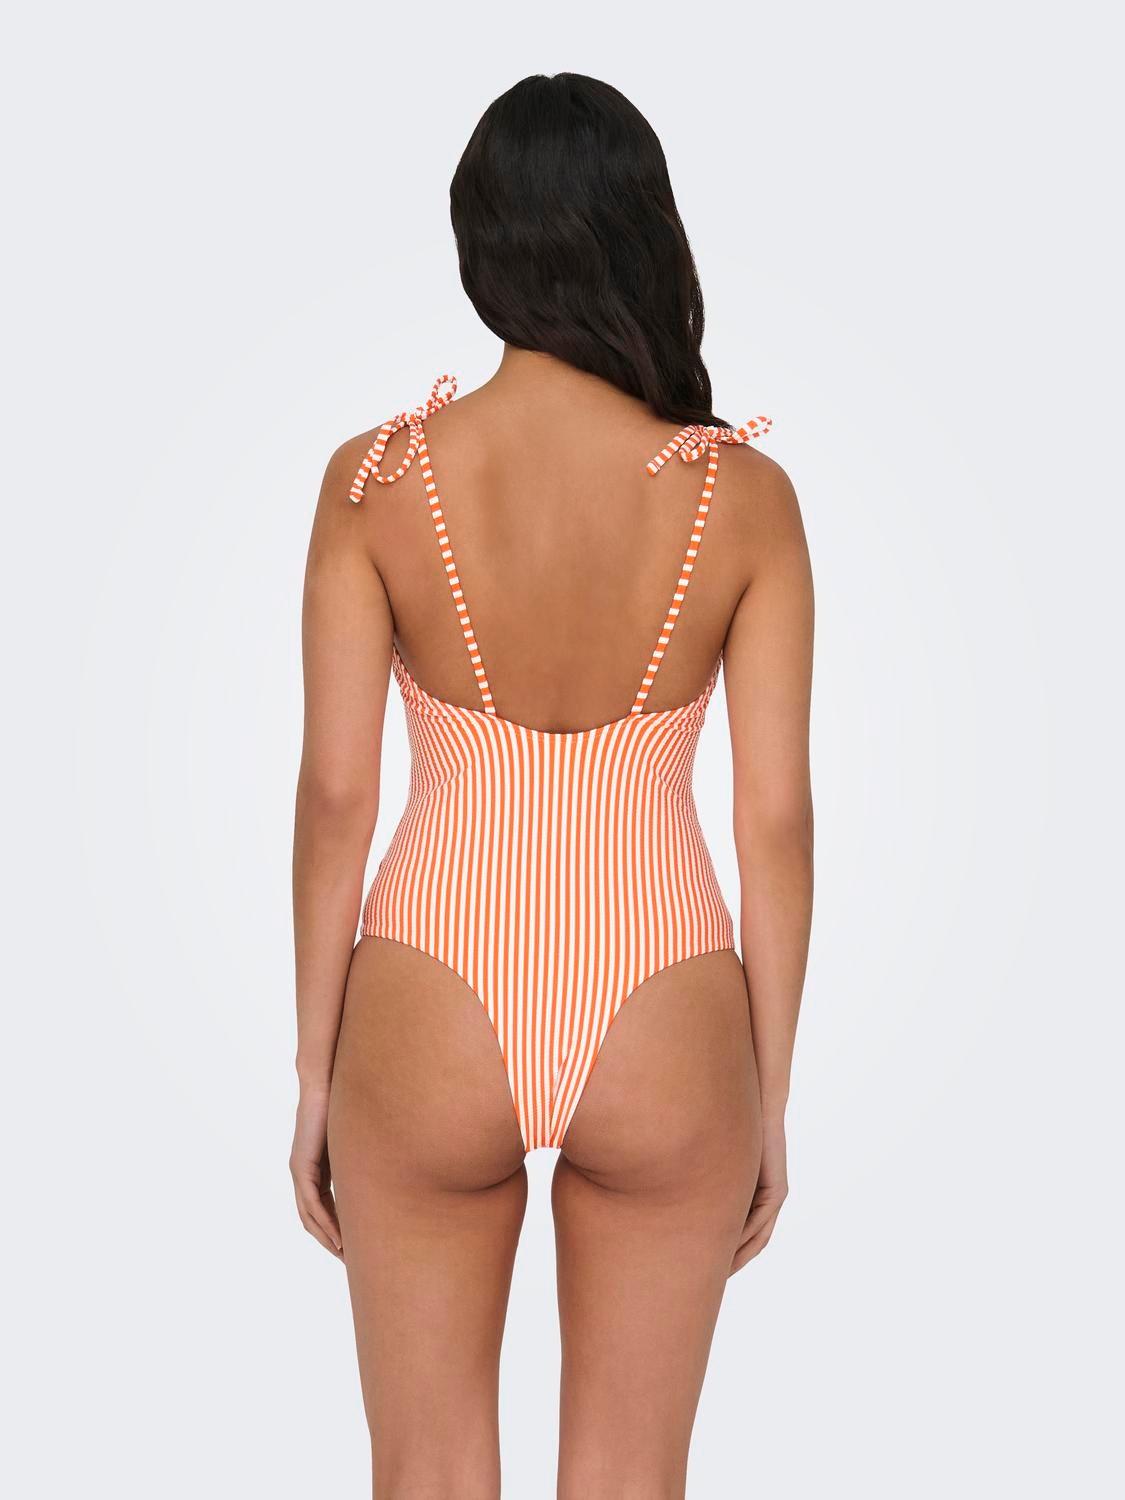 ONLY High waist Adjustable shoulder straps Swimwear -Cherry Tomato - 15250479